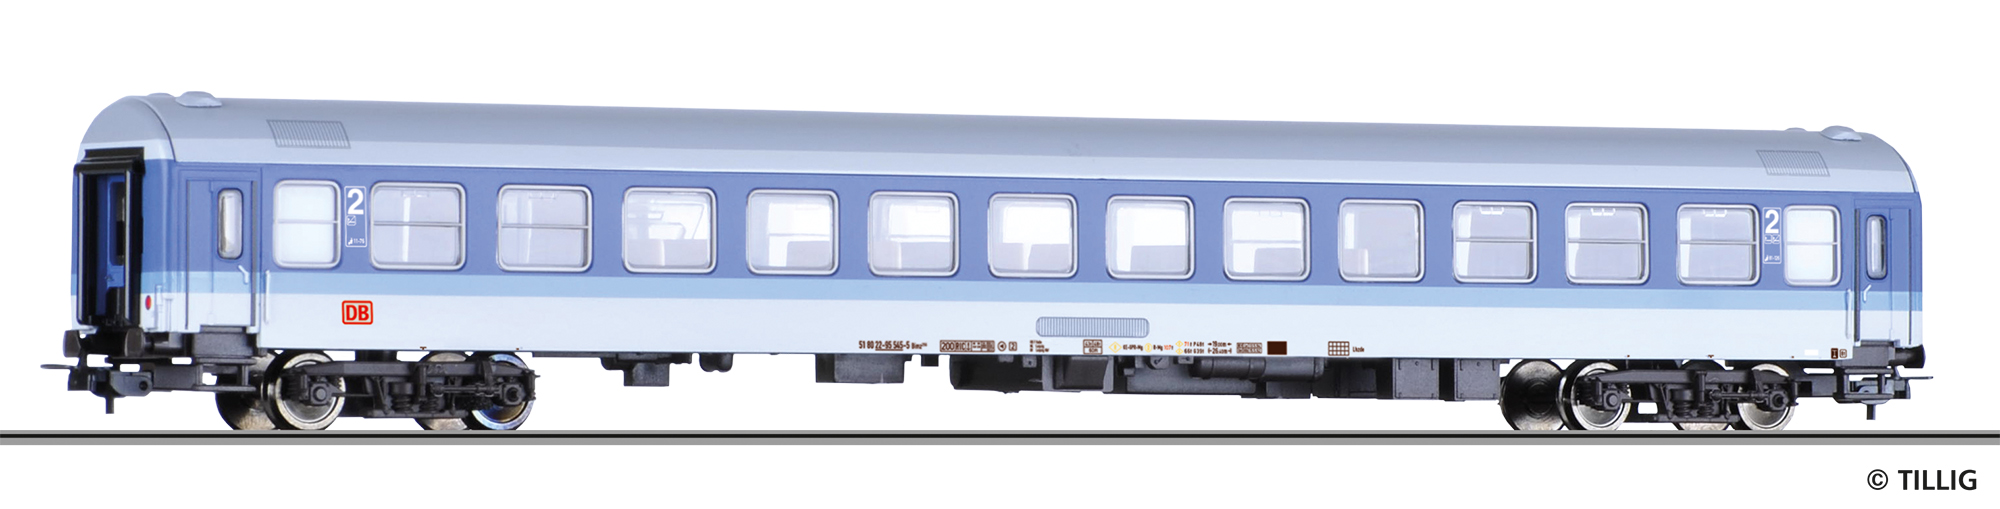 DBAG Personenwagen 2. Kl. Ep5 Gattung Bimz256, blau/hellgrau